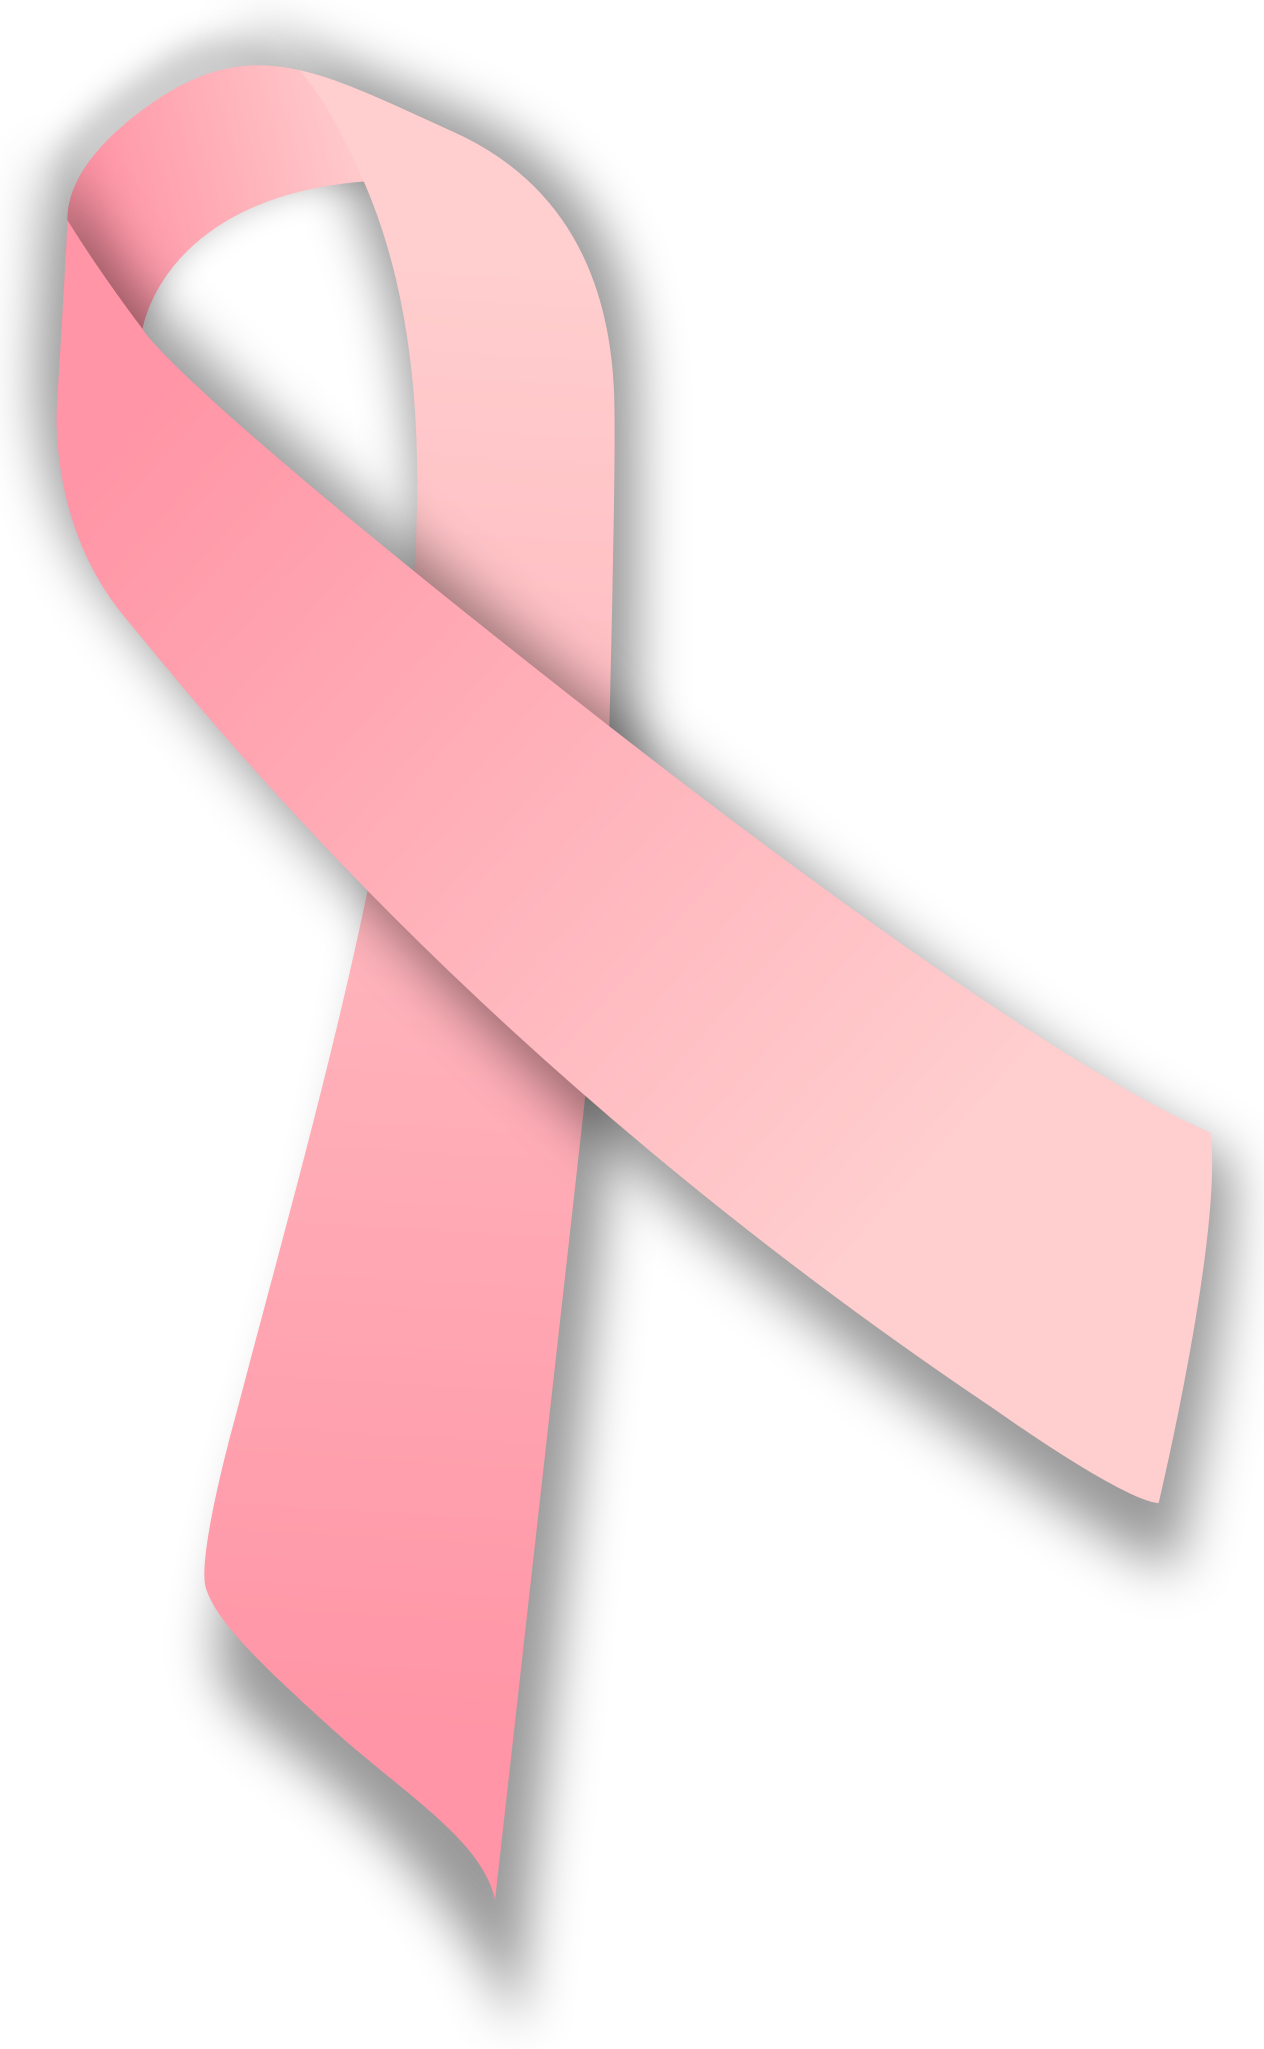 File:Pink BH logo.png - Wikipedia